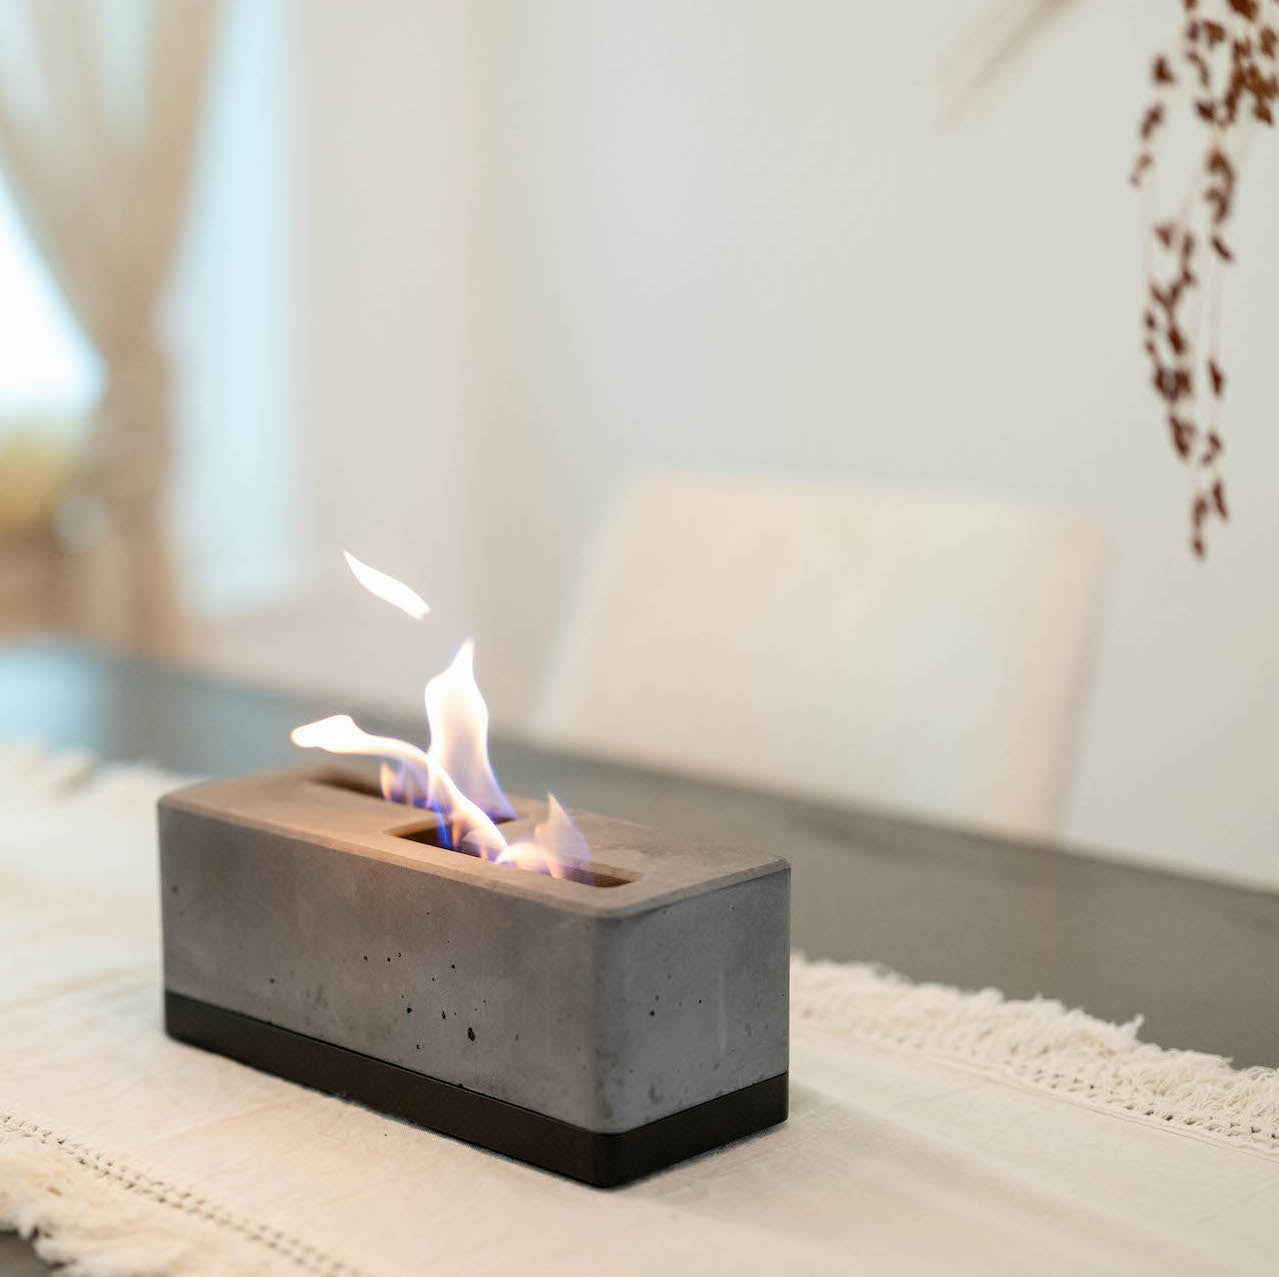 XL Personal Fireplace by FLIKRFIRE